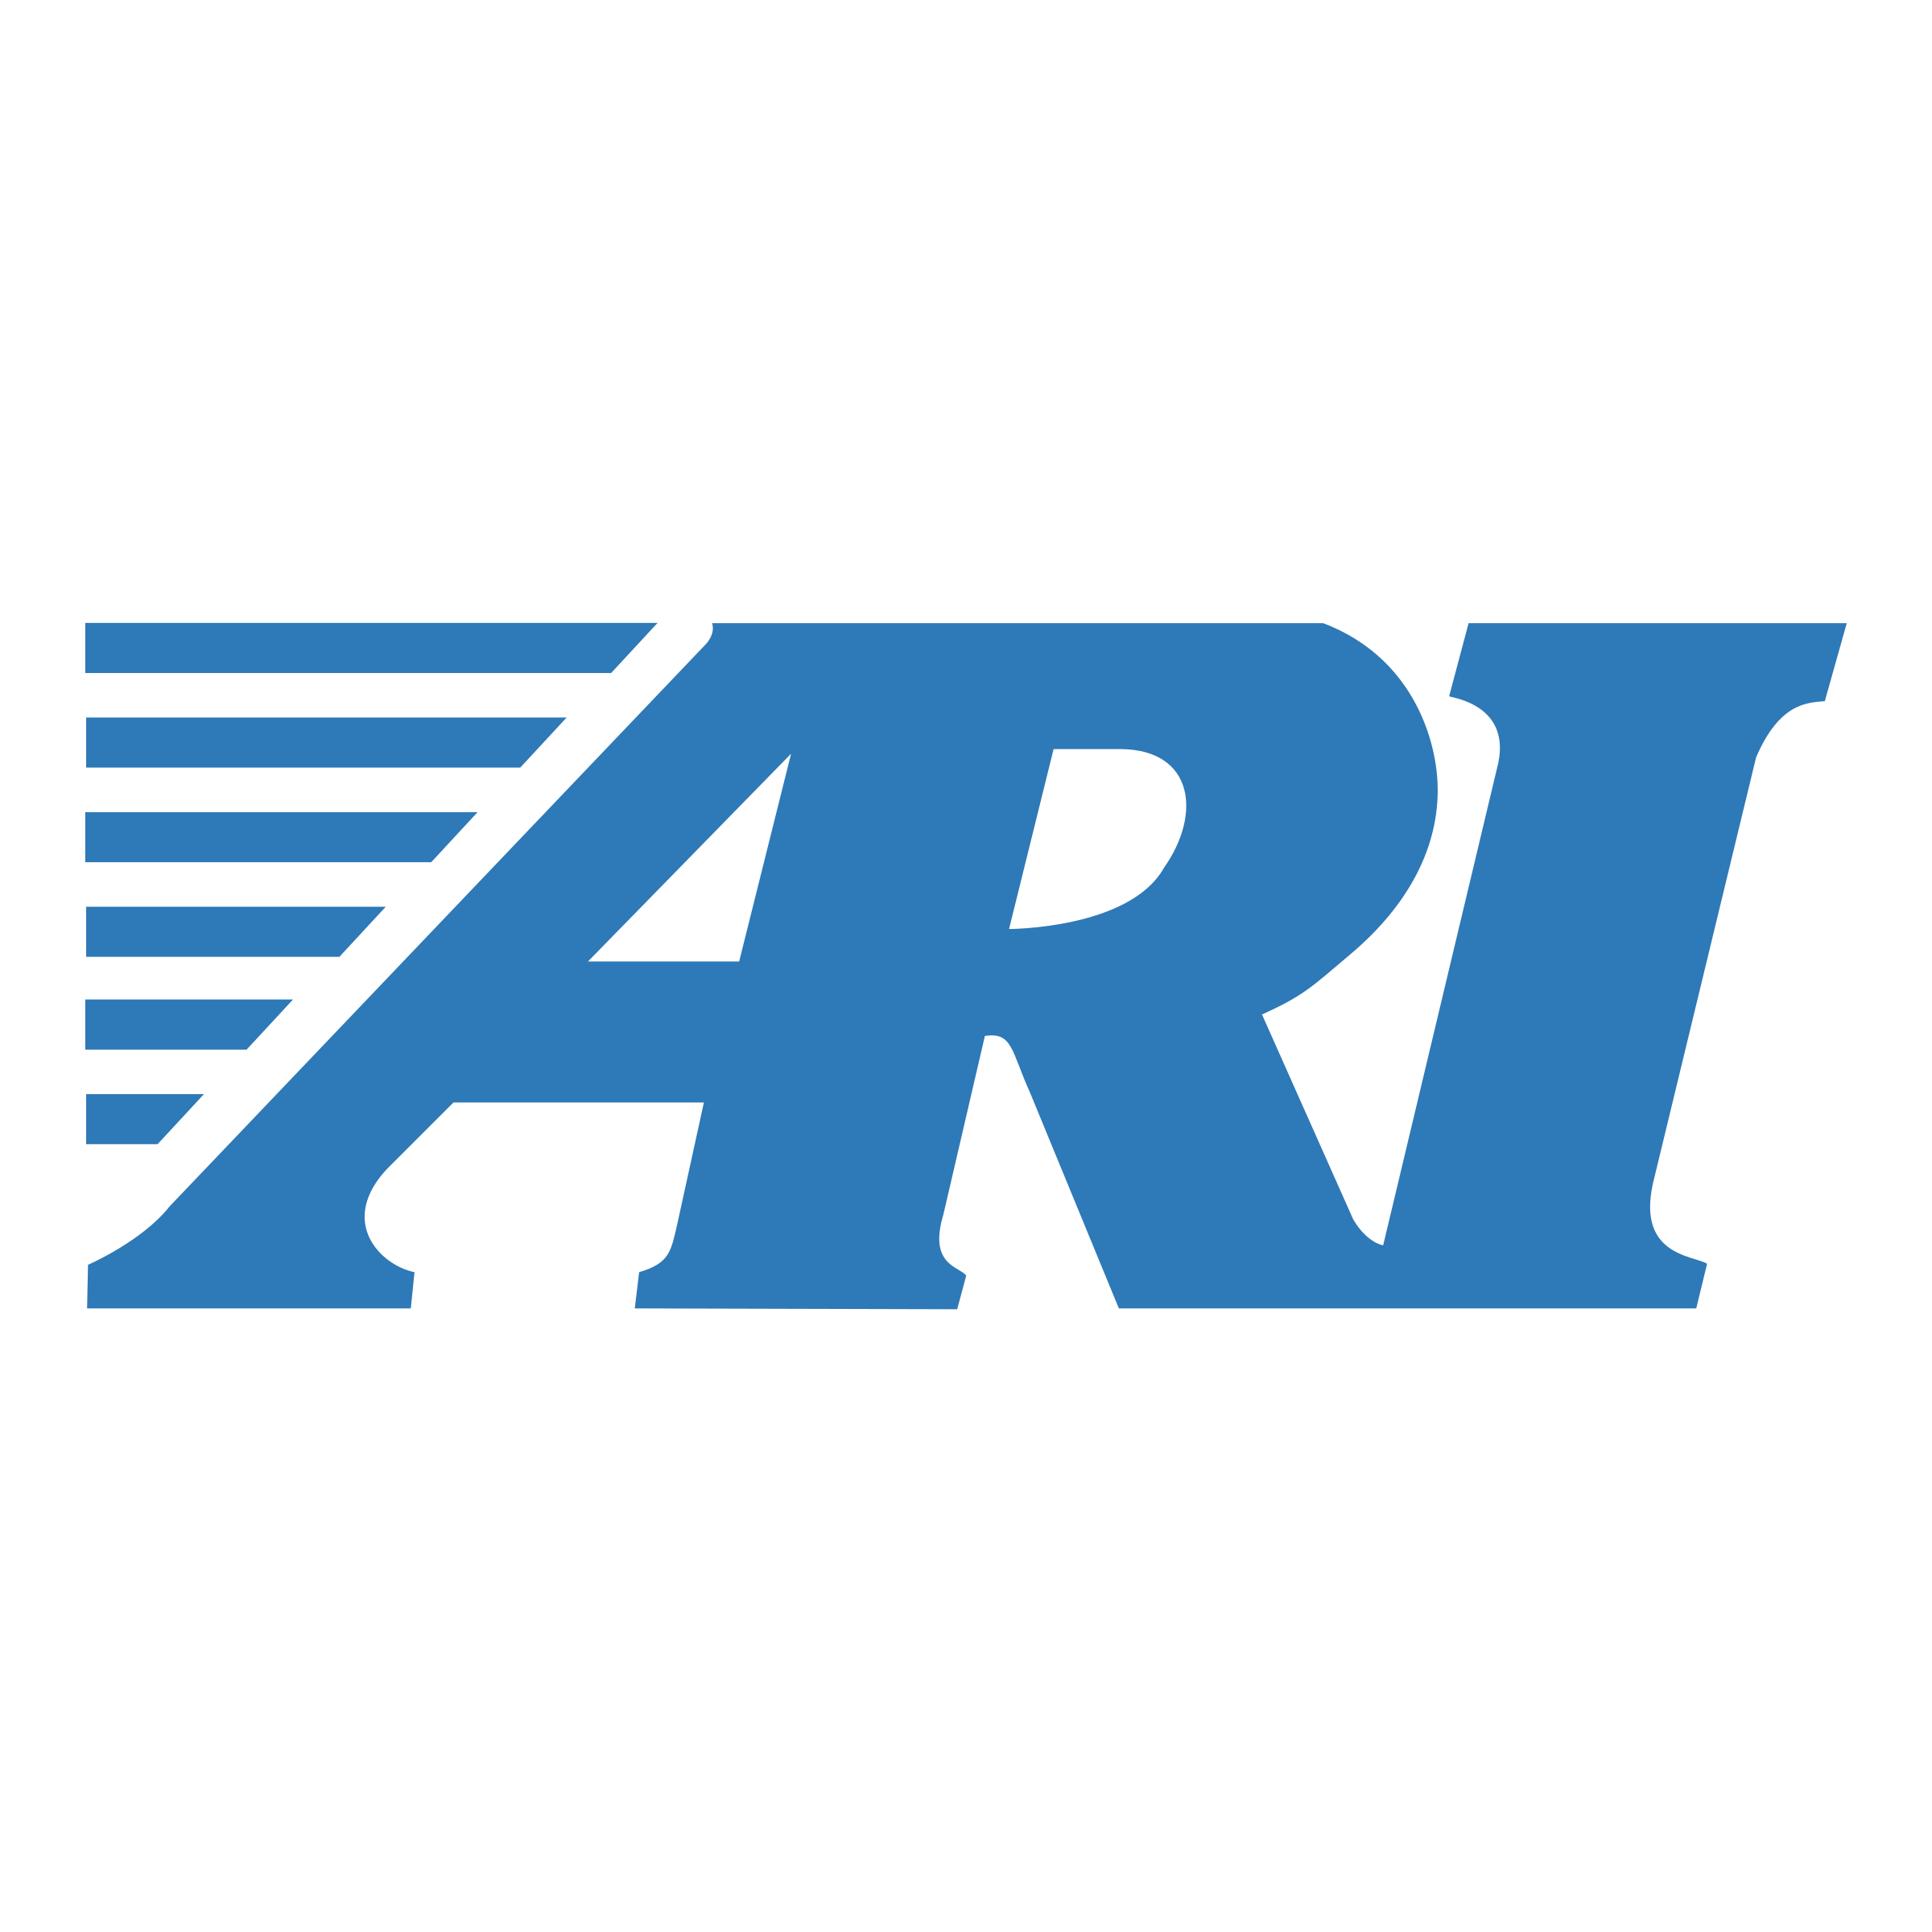 Ari Logo - ARI Network Services 01 Logo PNG Transparent & SVG Vector - Freebie ...